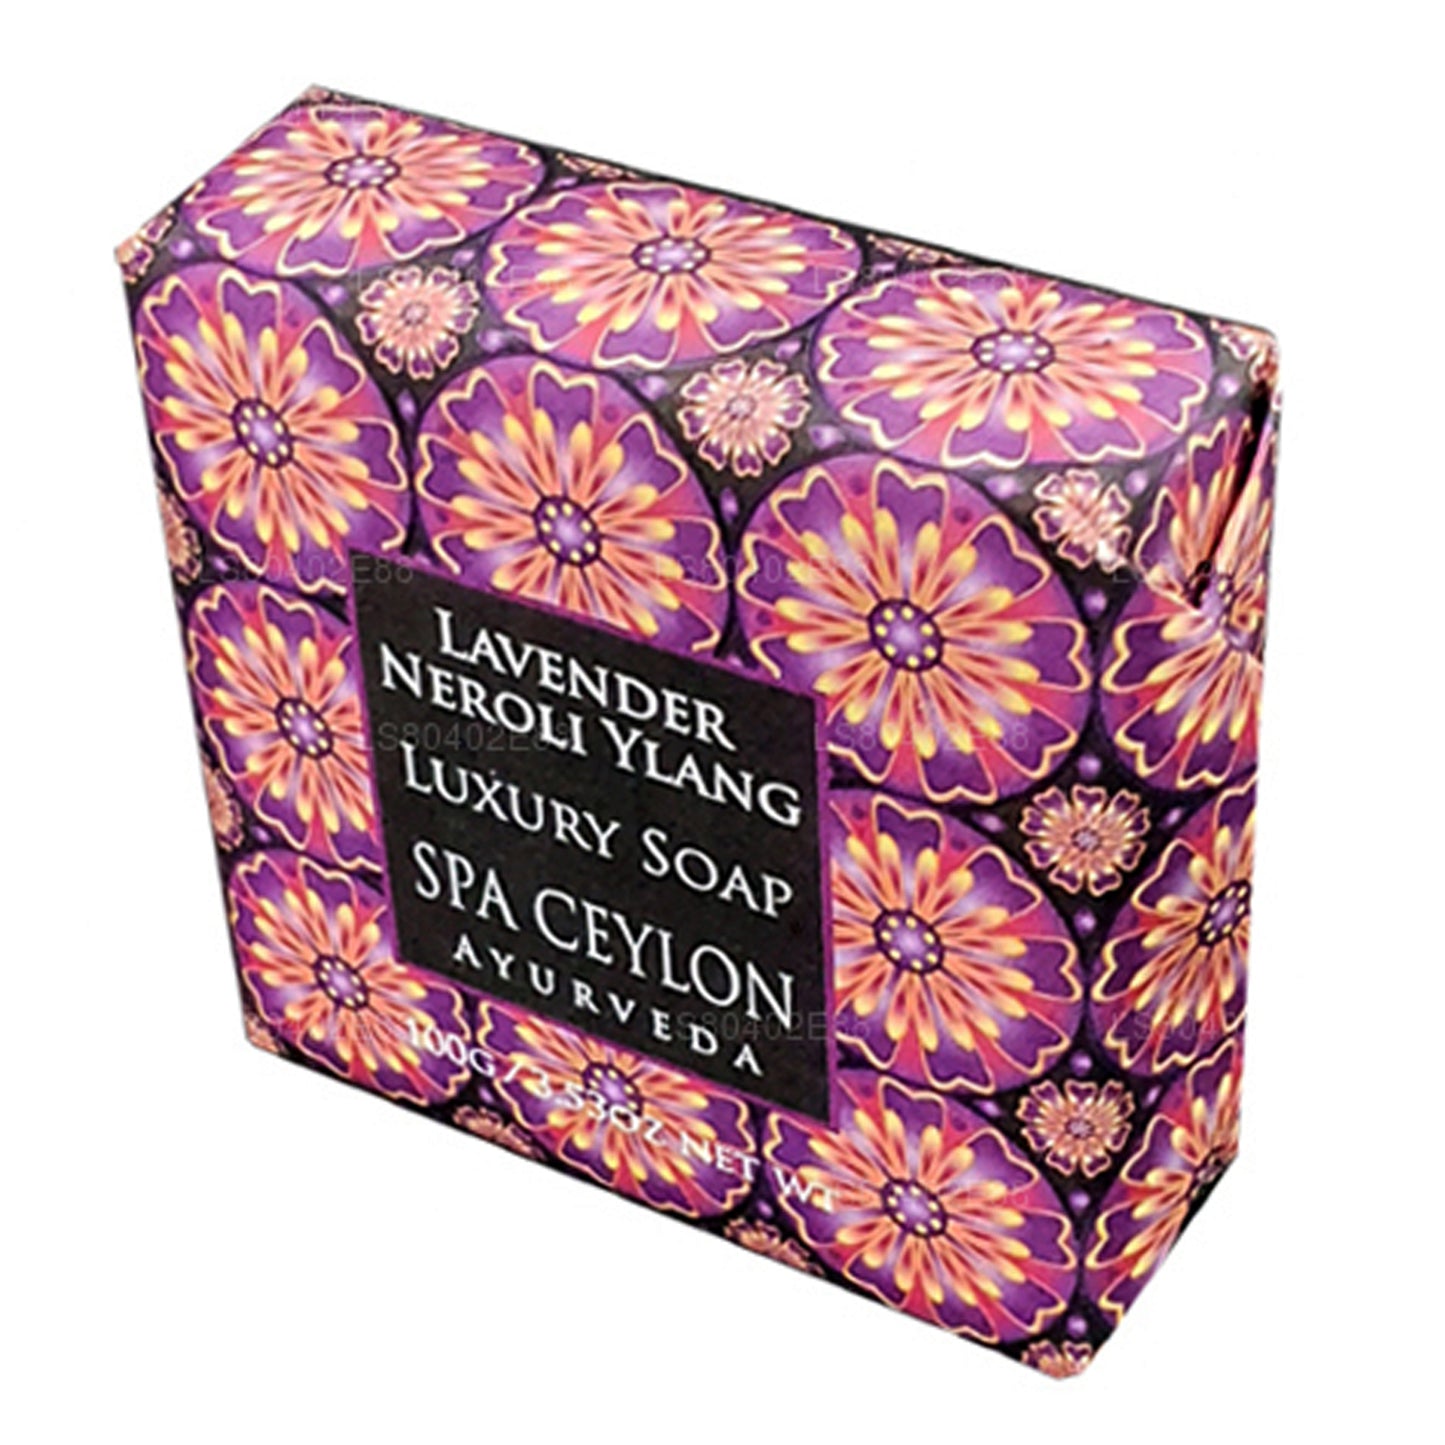 Spa Ceylon Lavender Neroli Ylang luksusseep (100g)